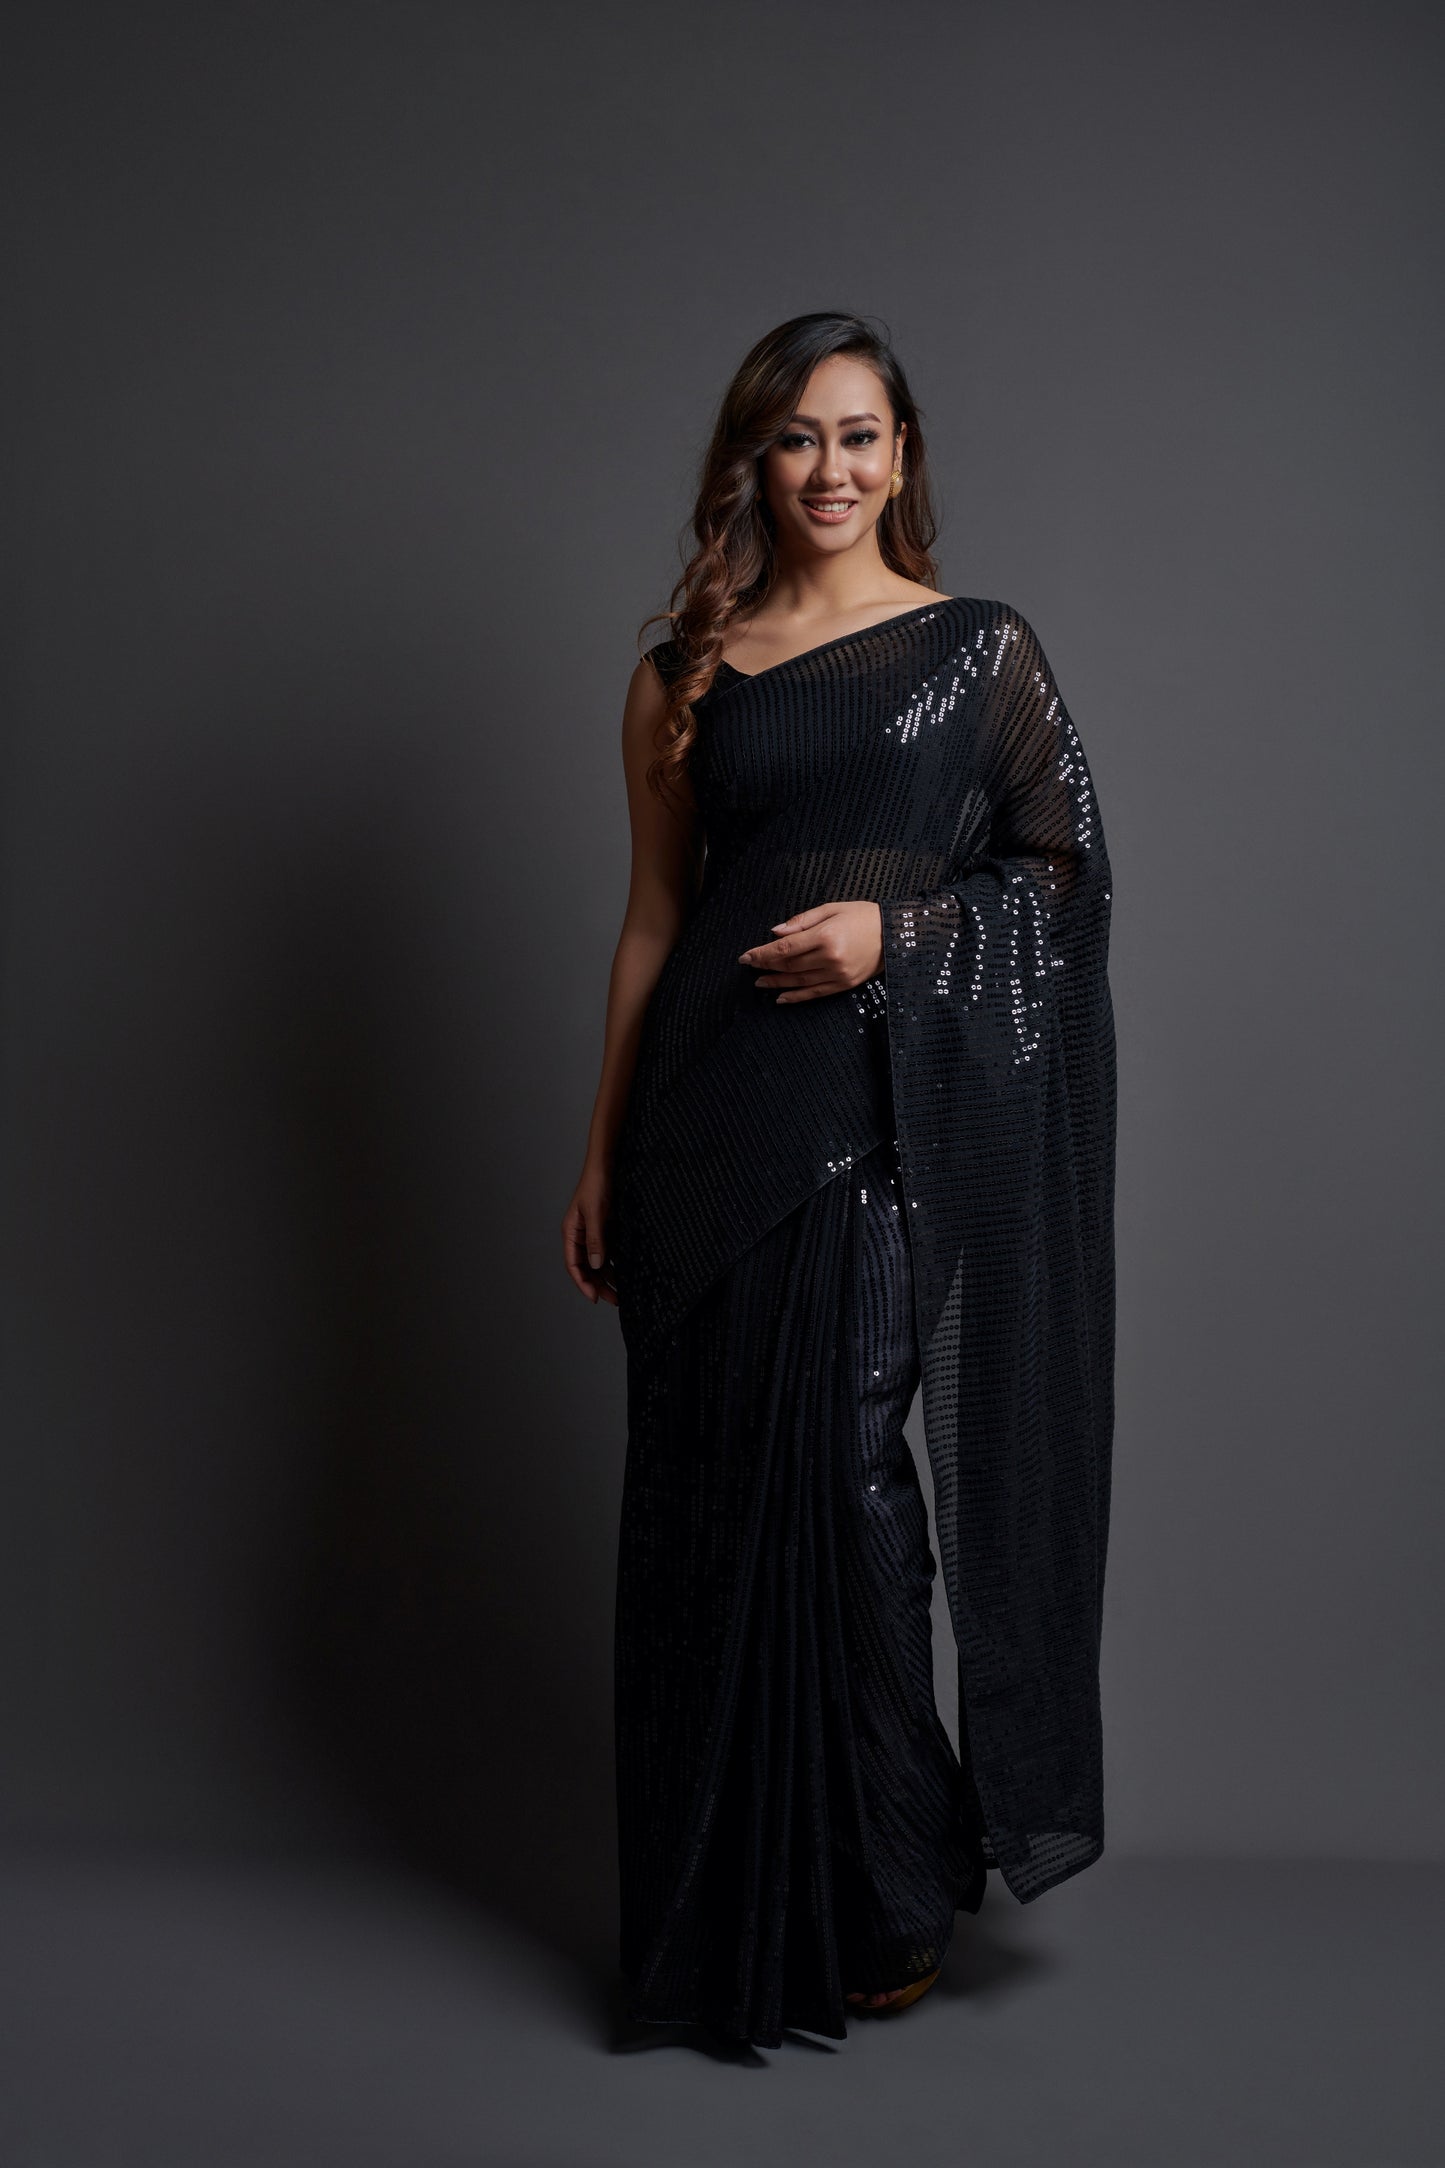 Buy Black Sequin Saree online at Best Prices in India